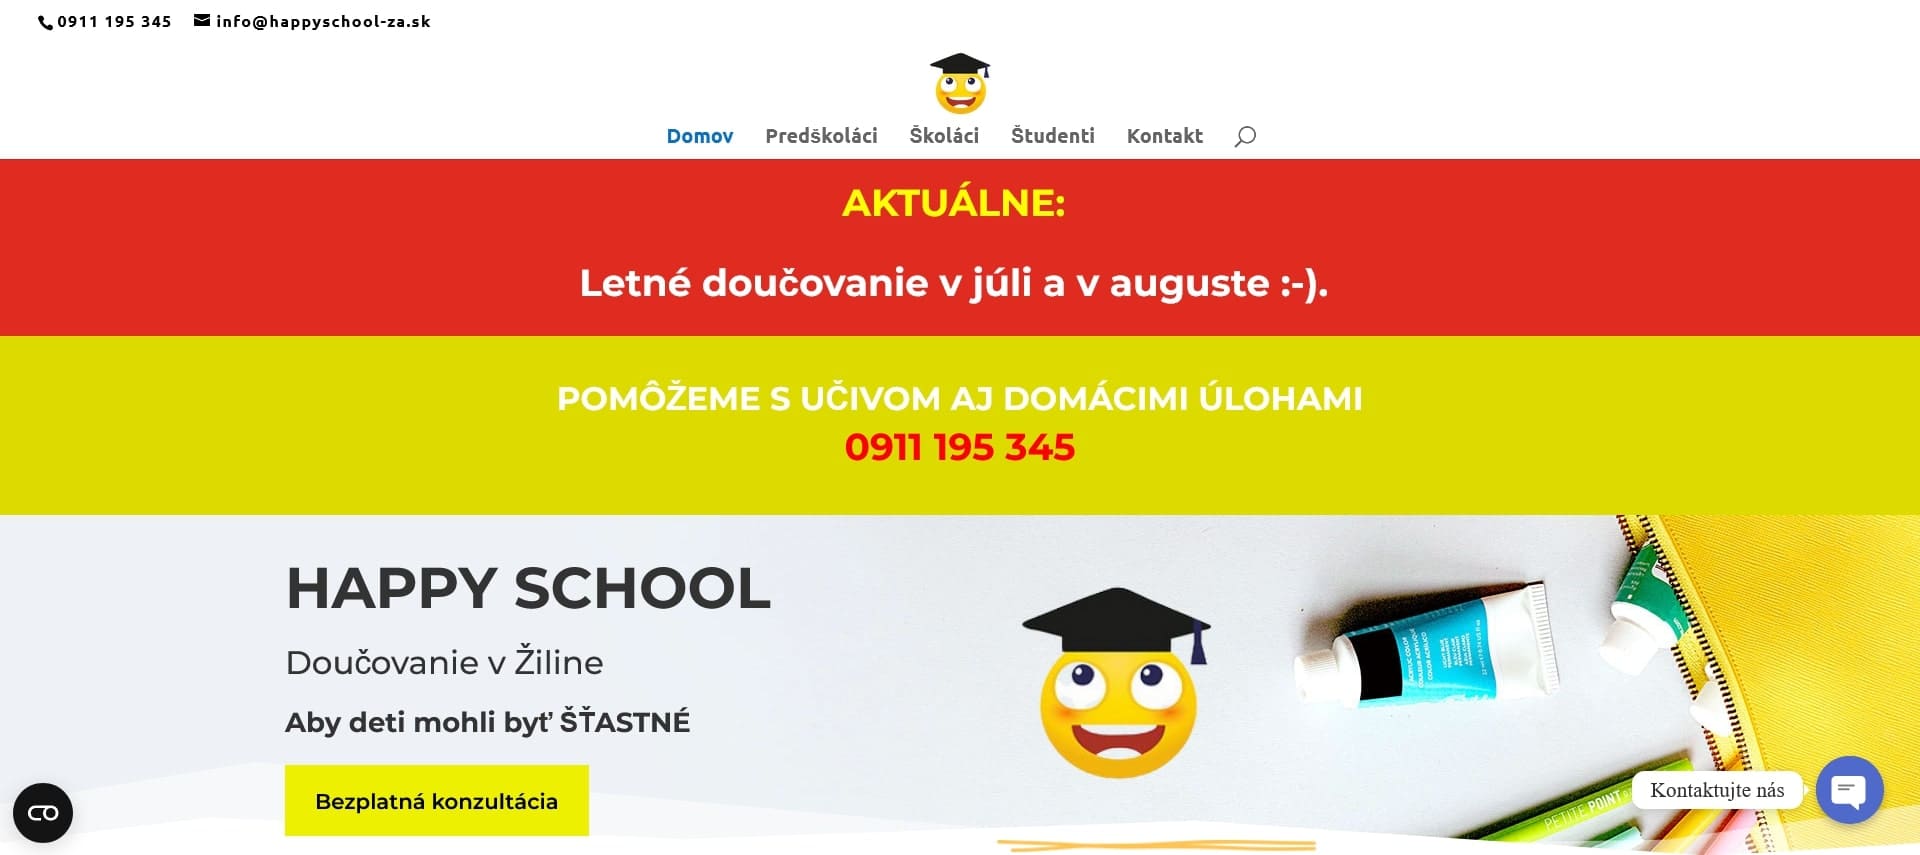 Doučovanie v Žiline_Happy school_ www.happyschool-za.sk_martina novakova